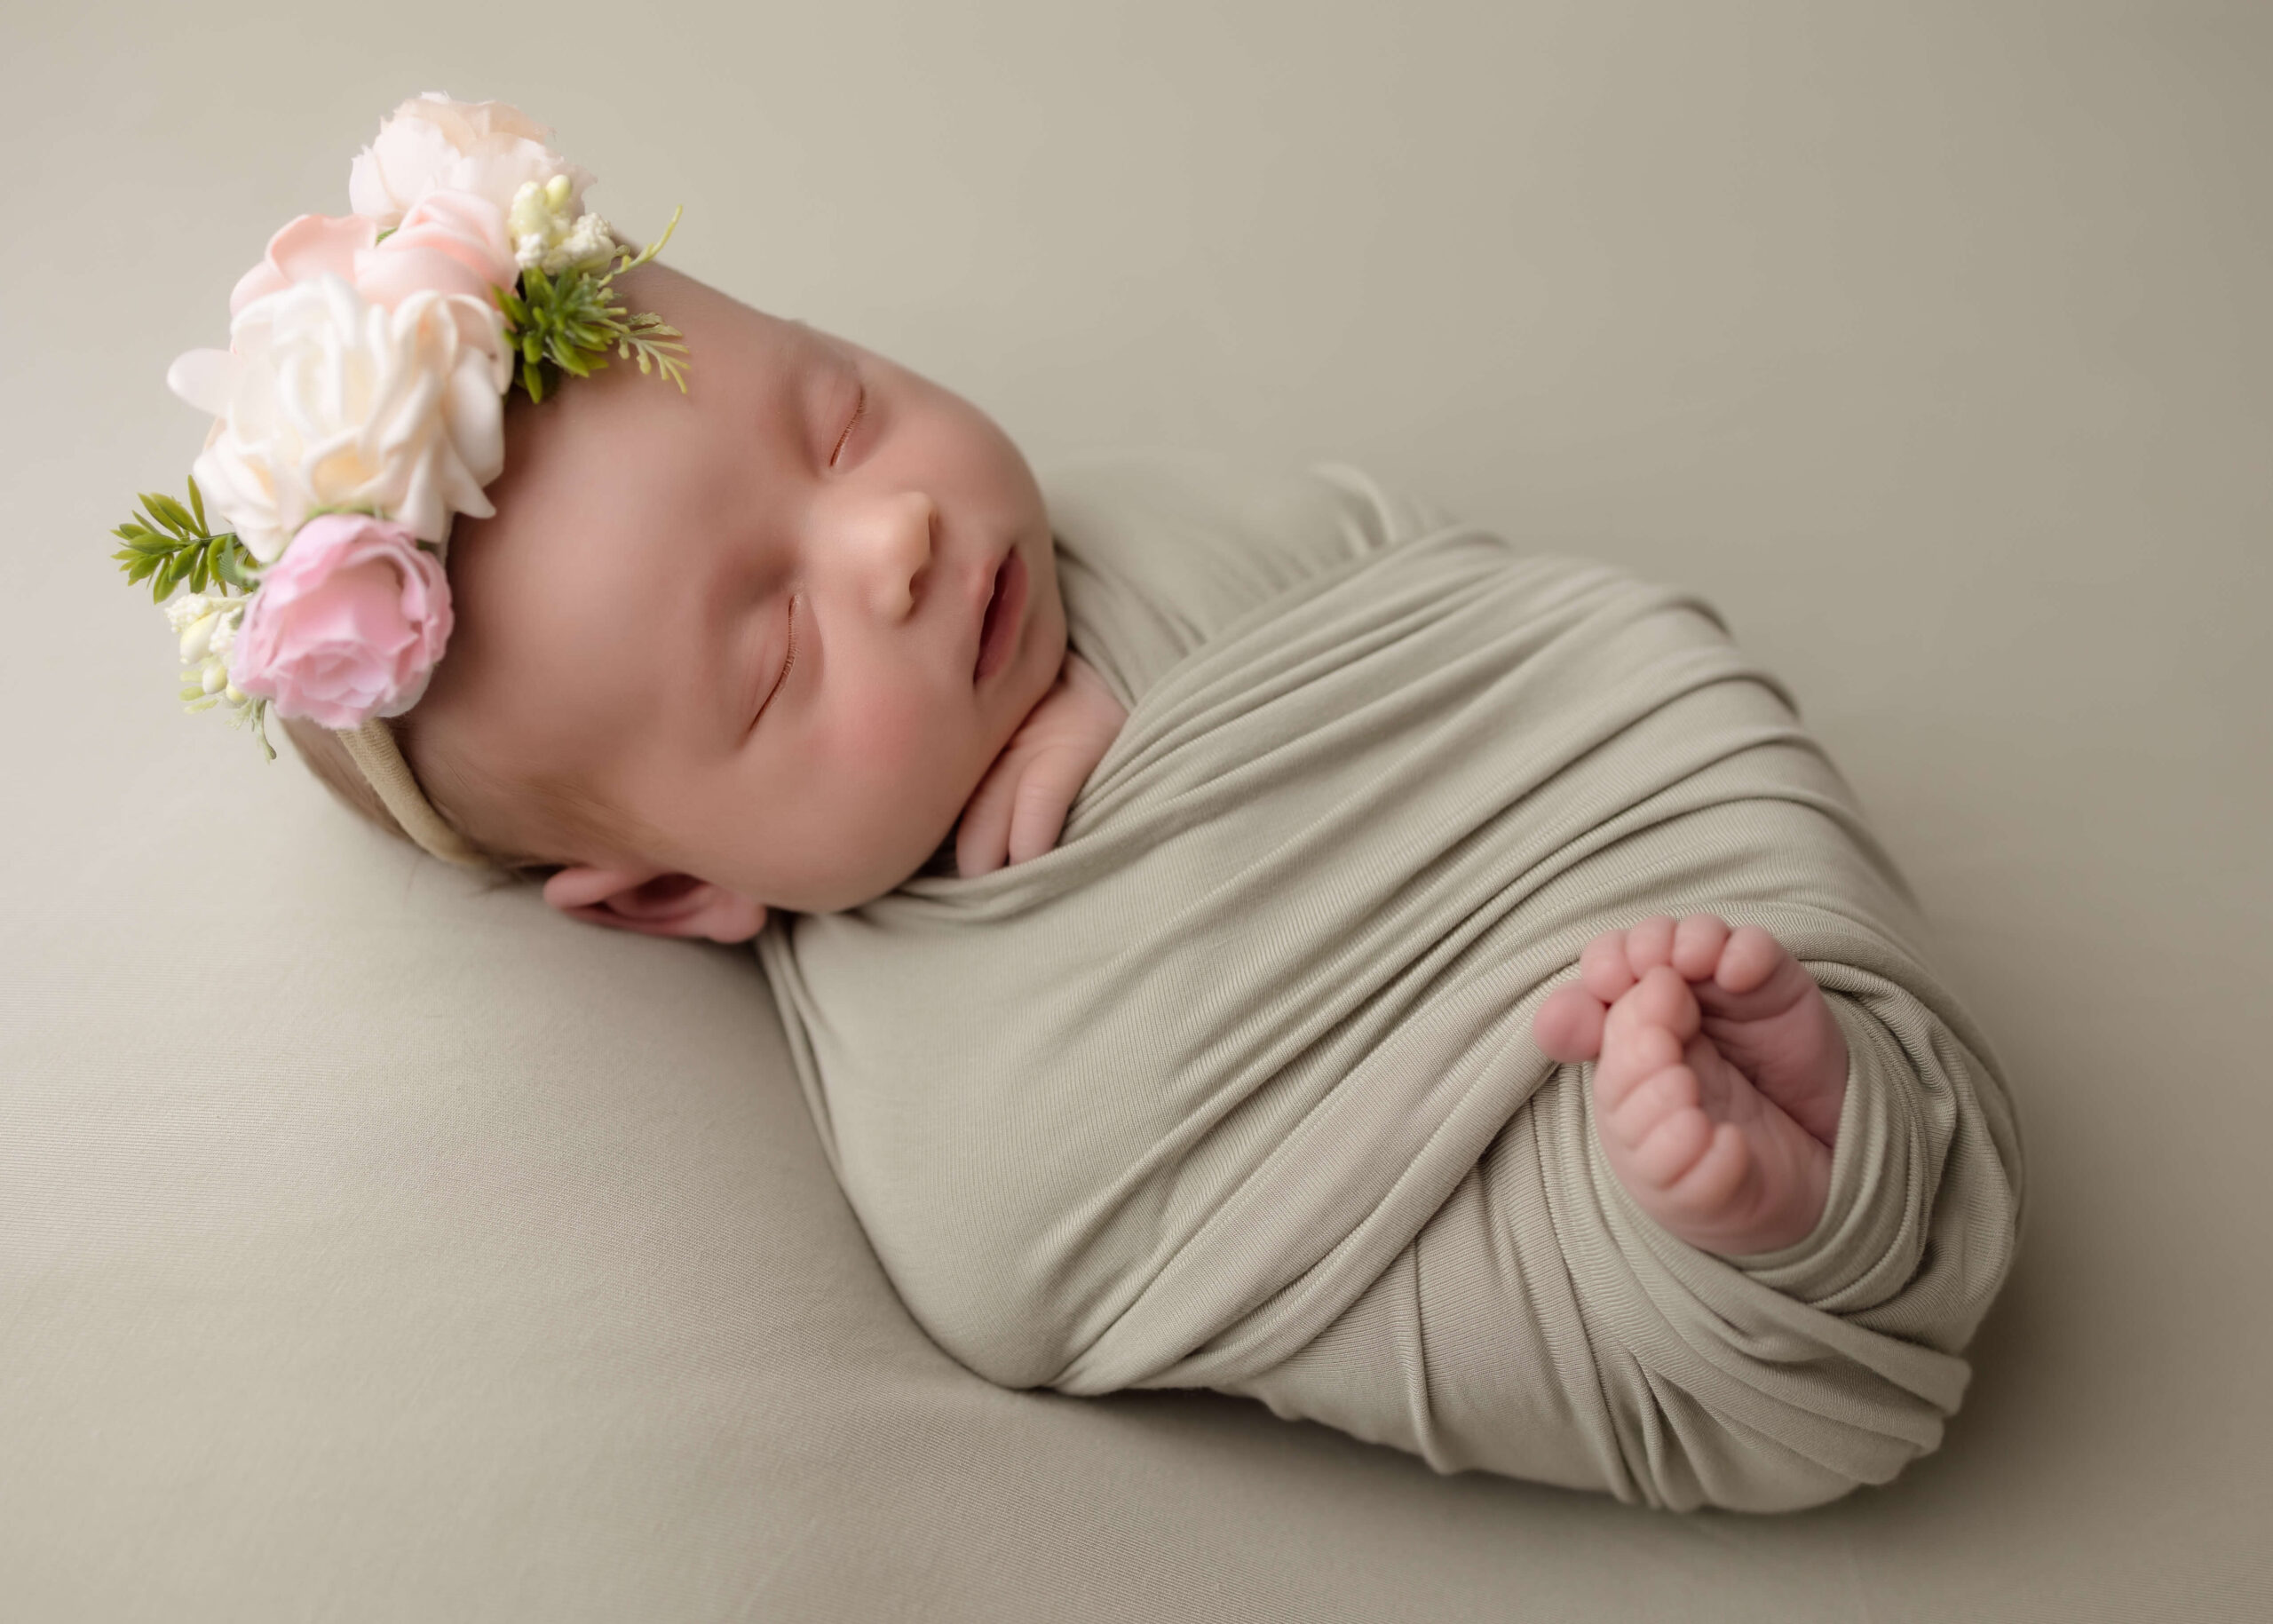 Baby girl swaddled and wearing flower headband while sleeping.